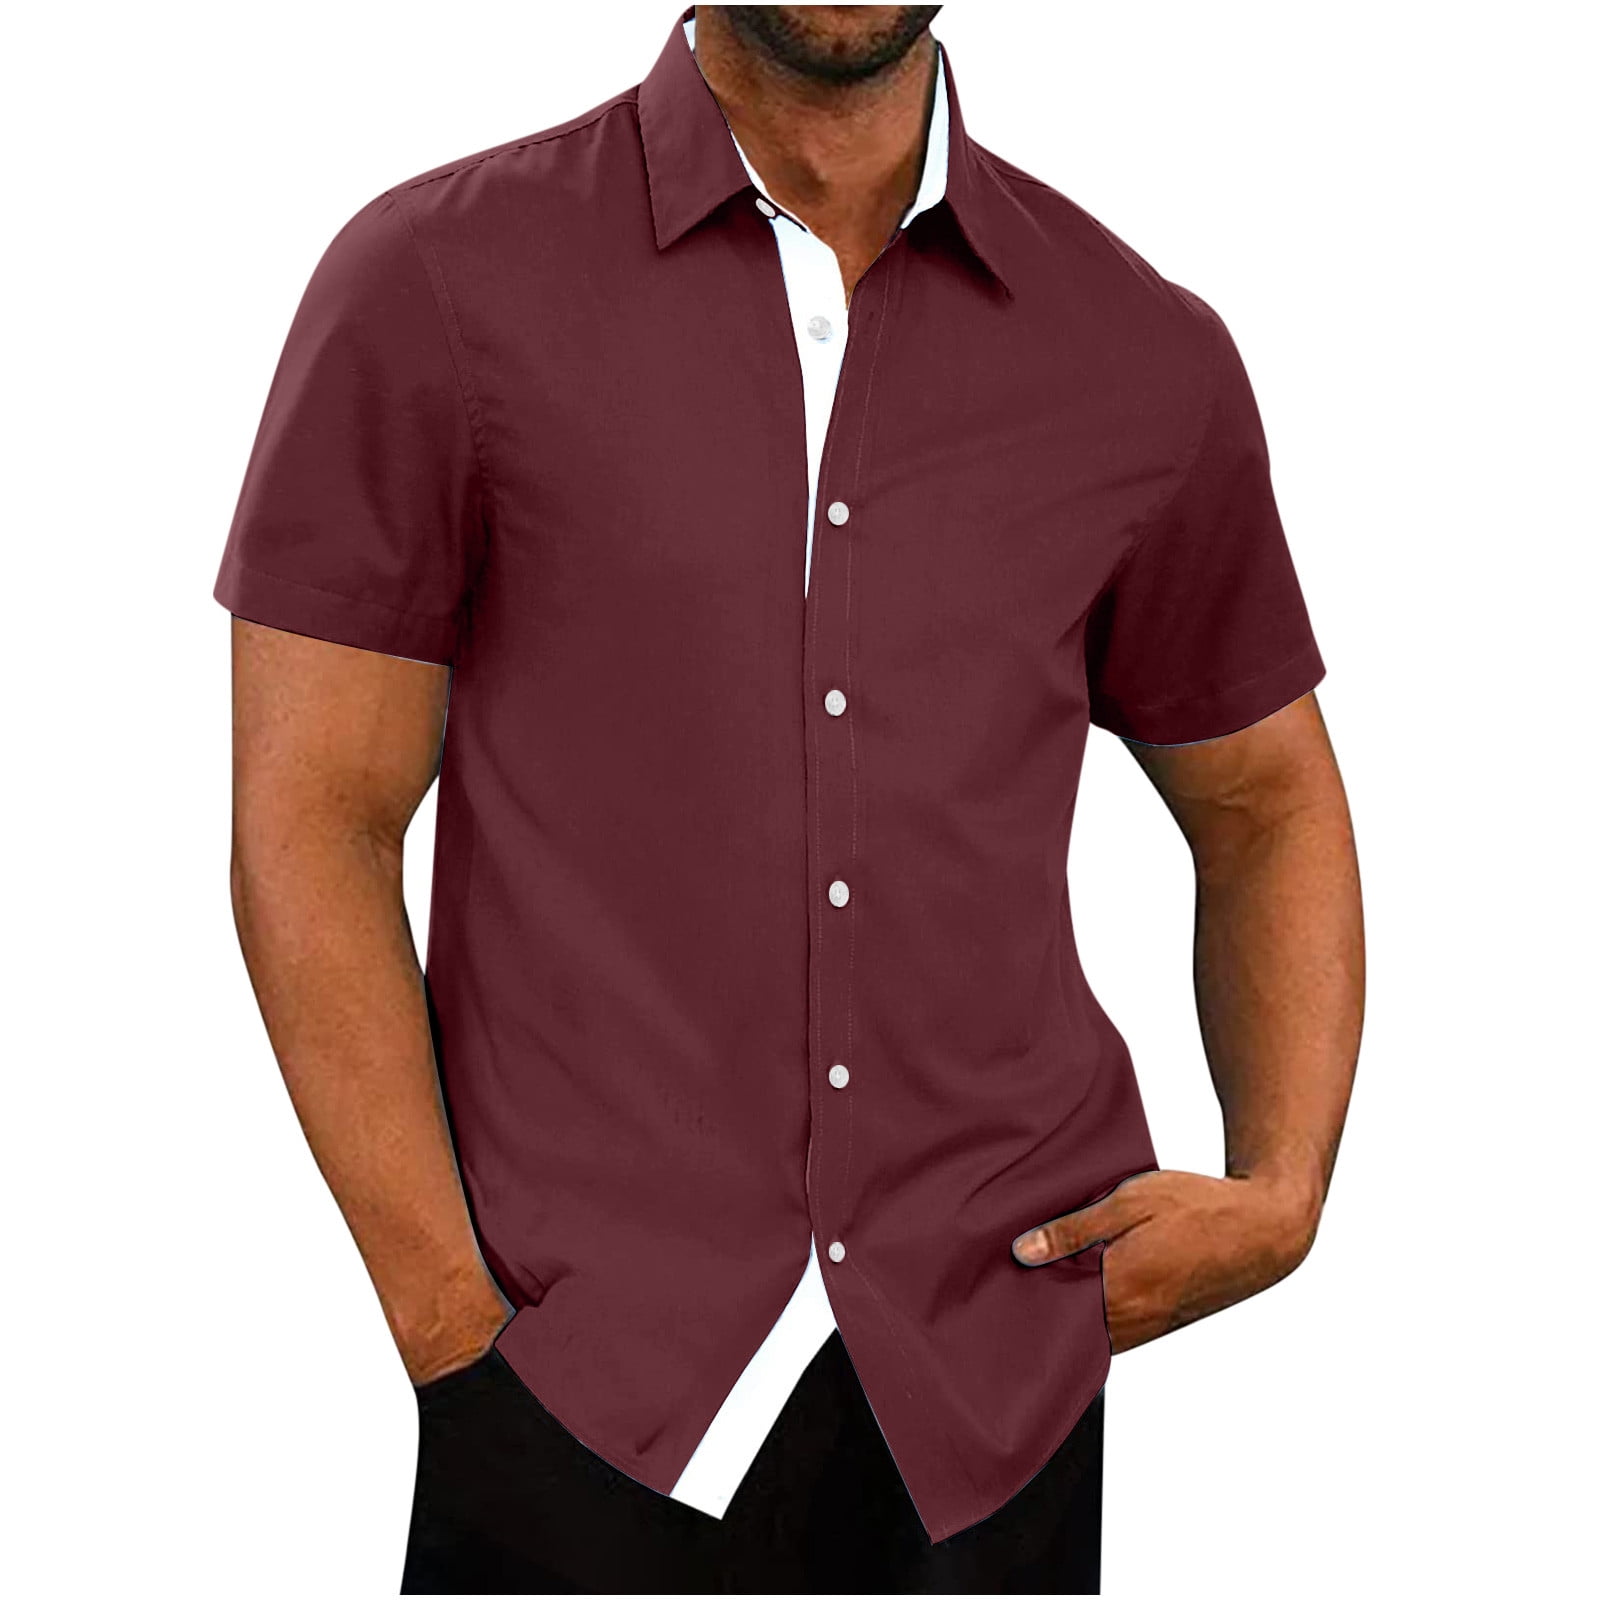 RYRJJ On Clearance Men's Short Sleeve Regular Fit Dress Shirts